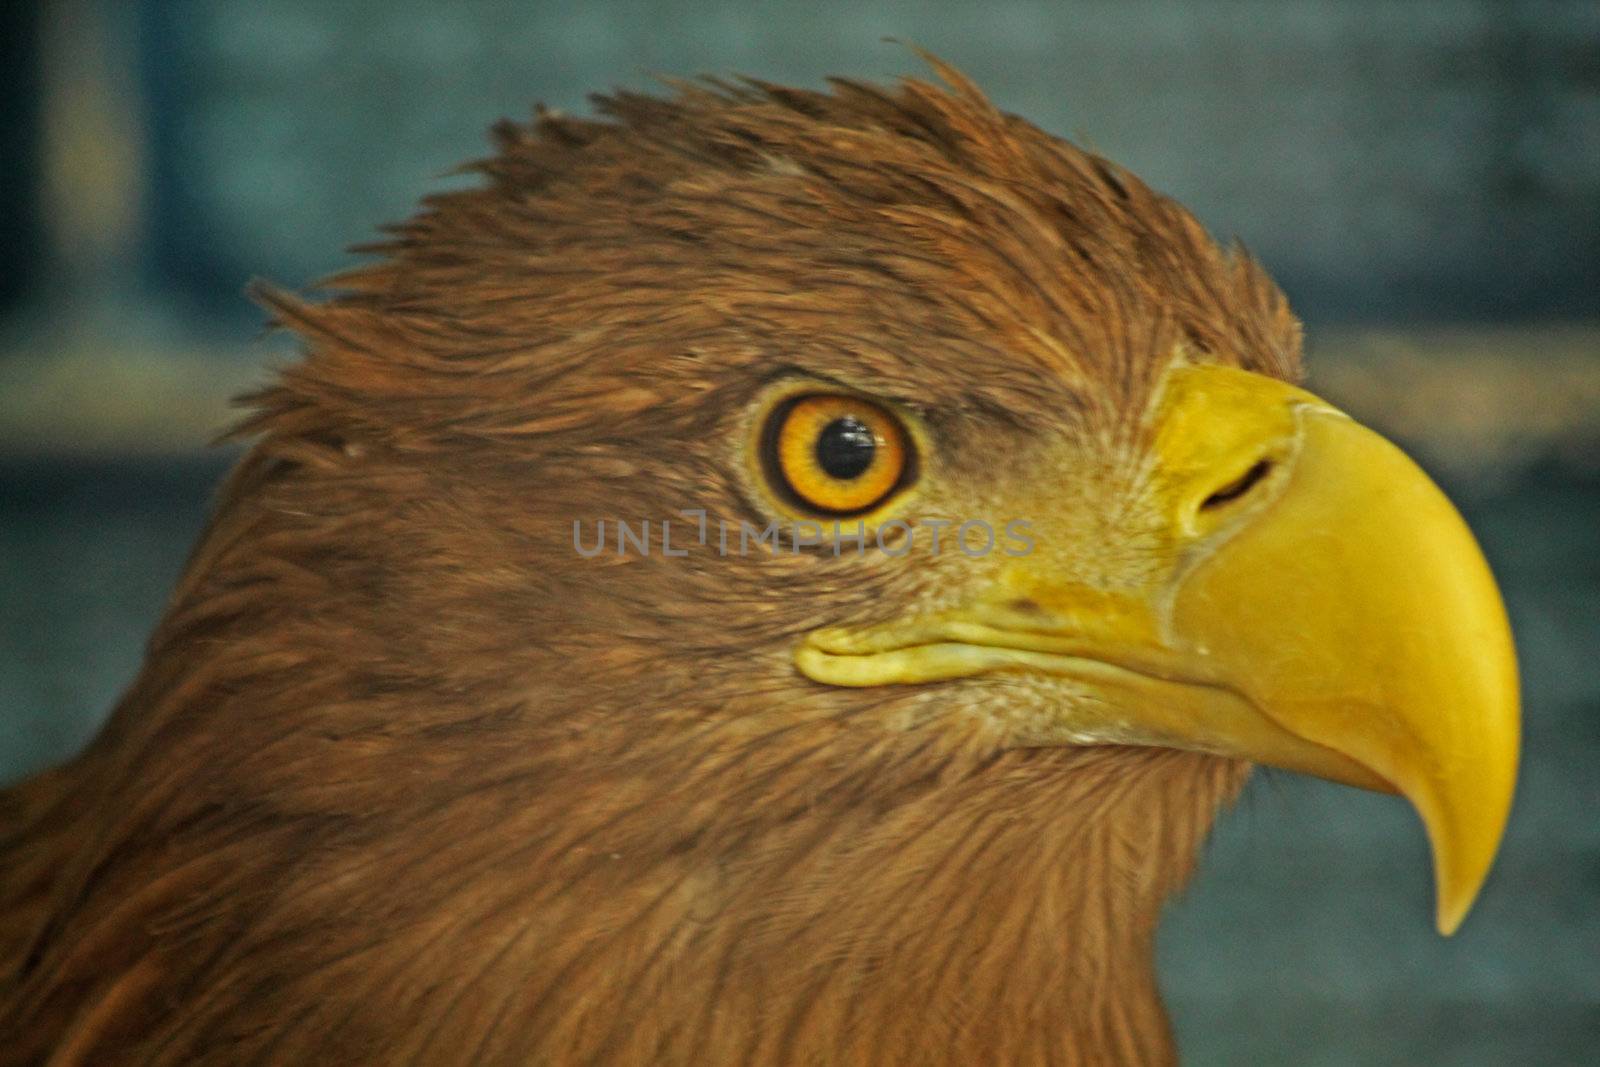 Close up of the eagle's head